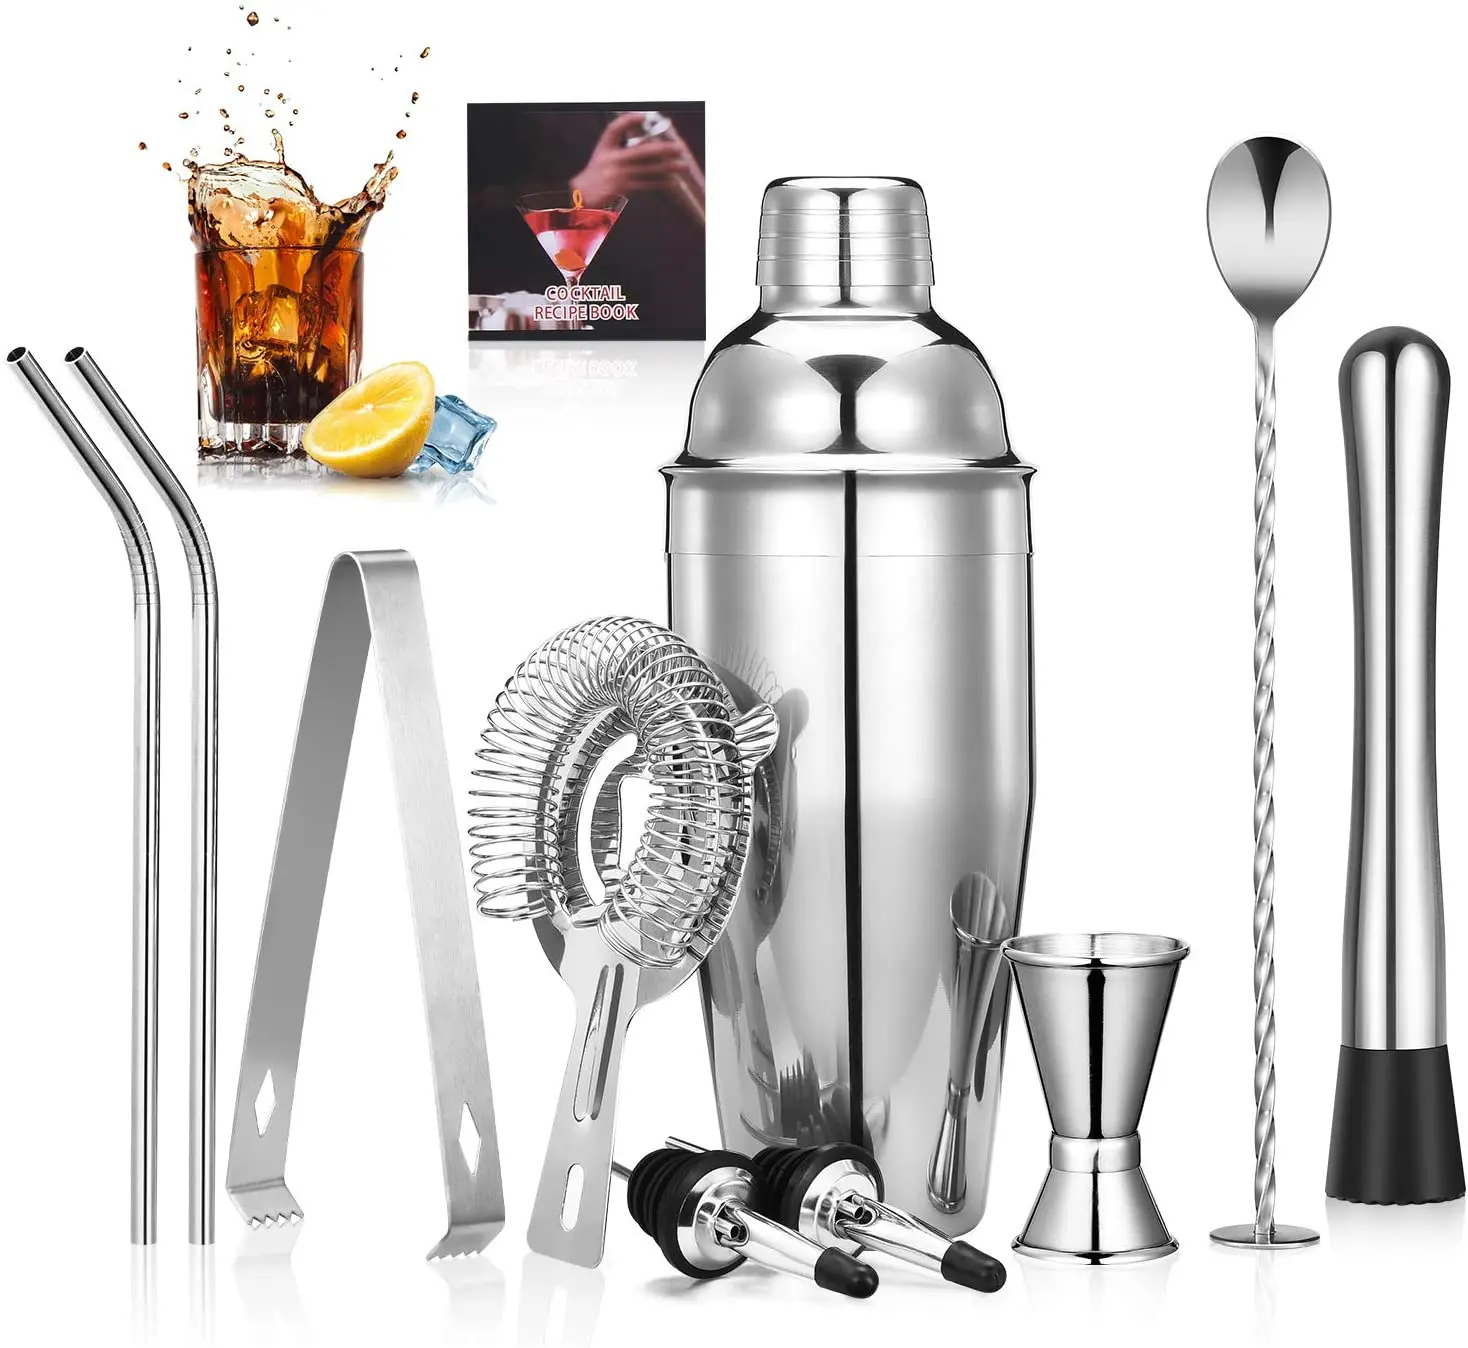 

Cocktail shaker set 25oz 10pcs Stainless Steel Bartender Kit Bar Tools Set shaker bottle Mixing Spoon Muddler Measuring Jigger